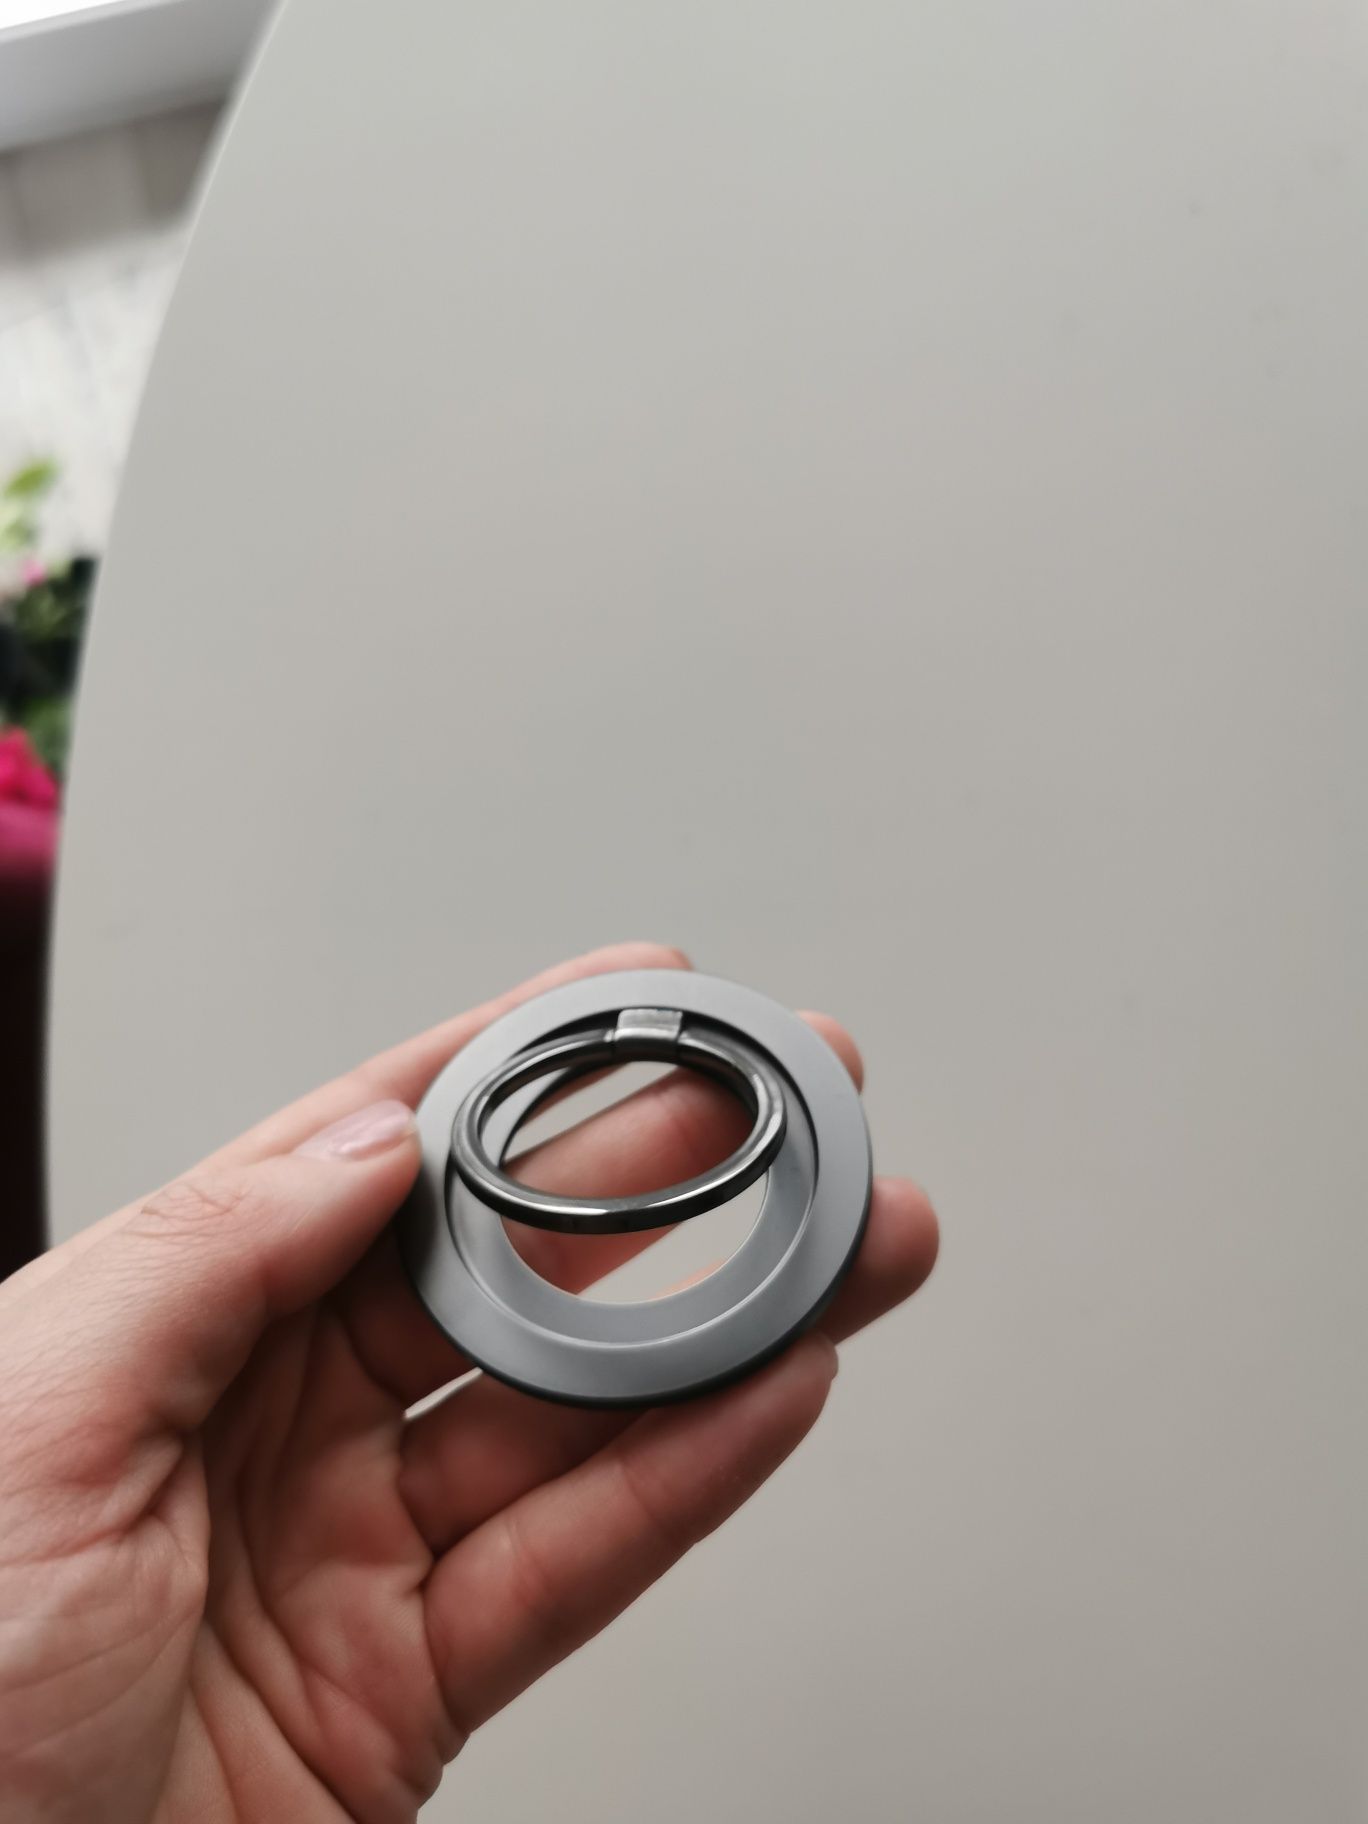 Składany ring podstawka stand to magsafe na telefon- mocmy magnes